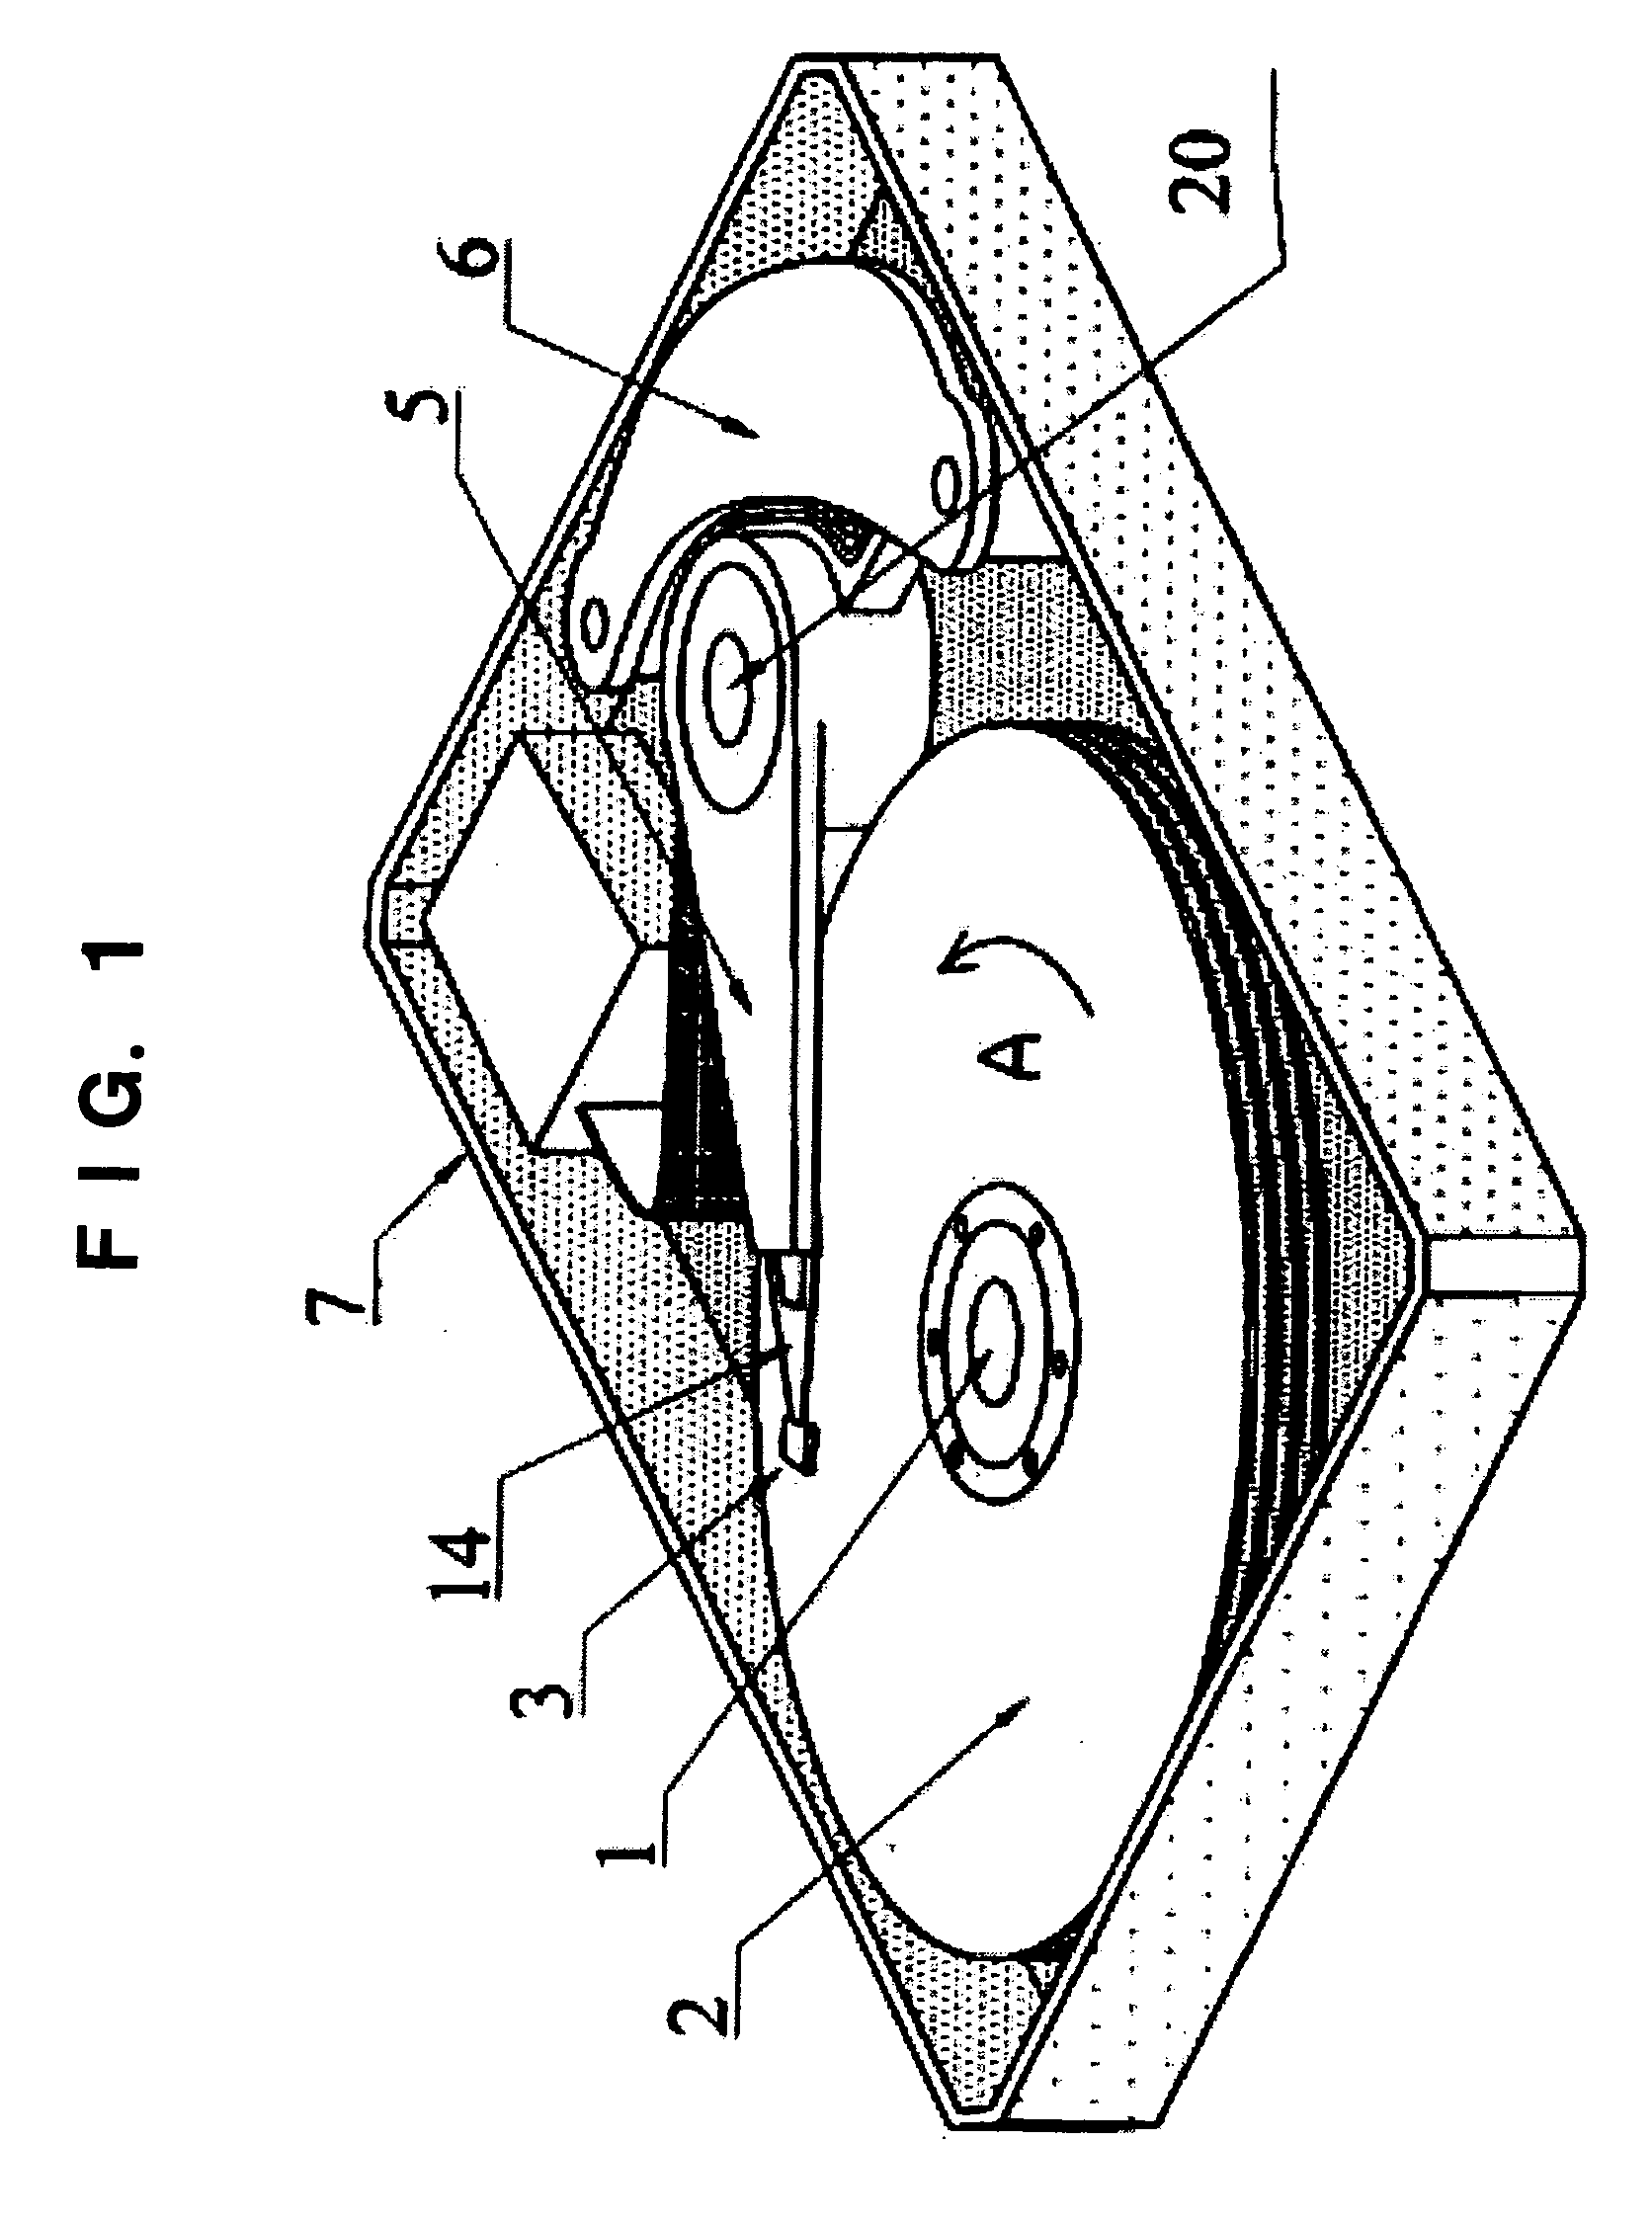 Slider and magnetic disk device using the slider